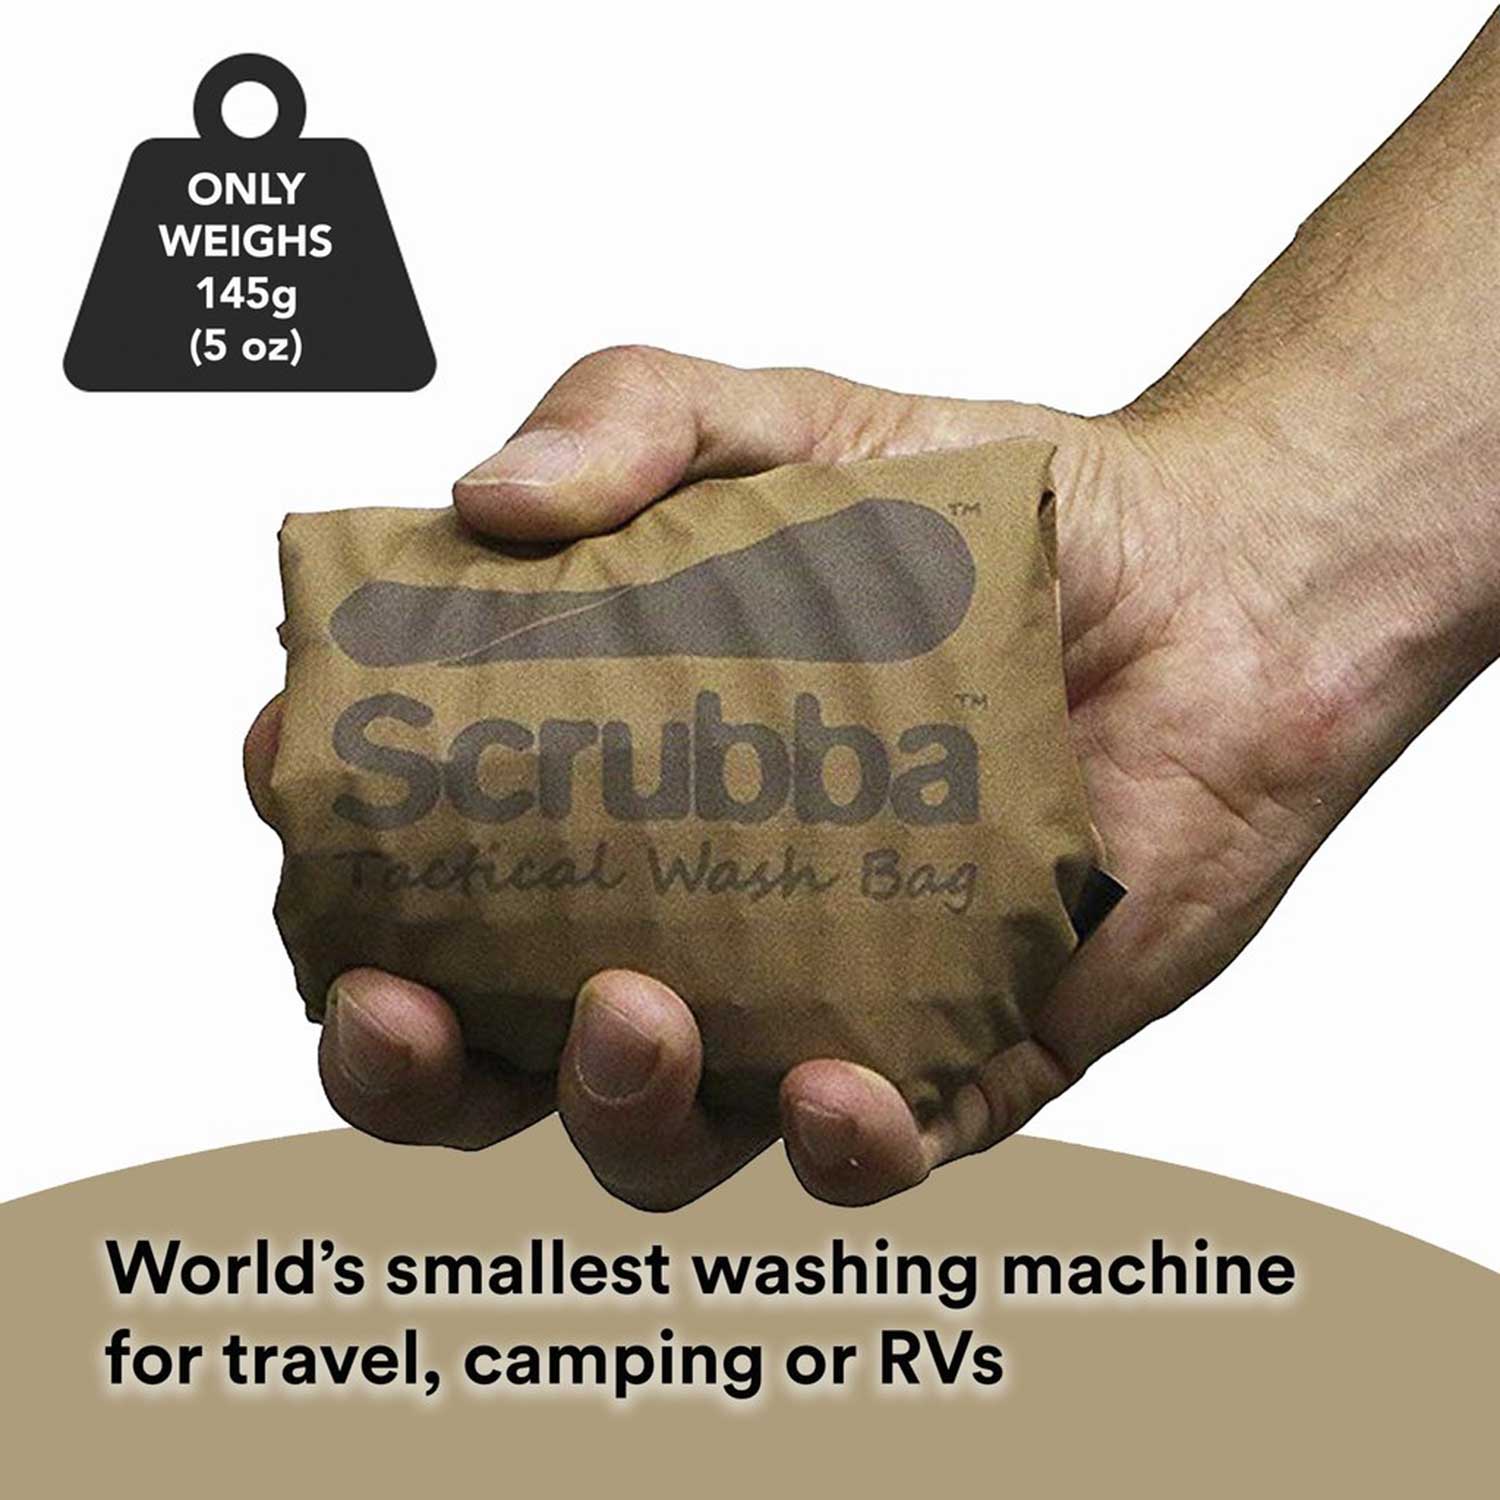 Used Scrubba Wash Bag